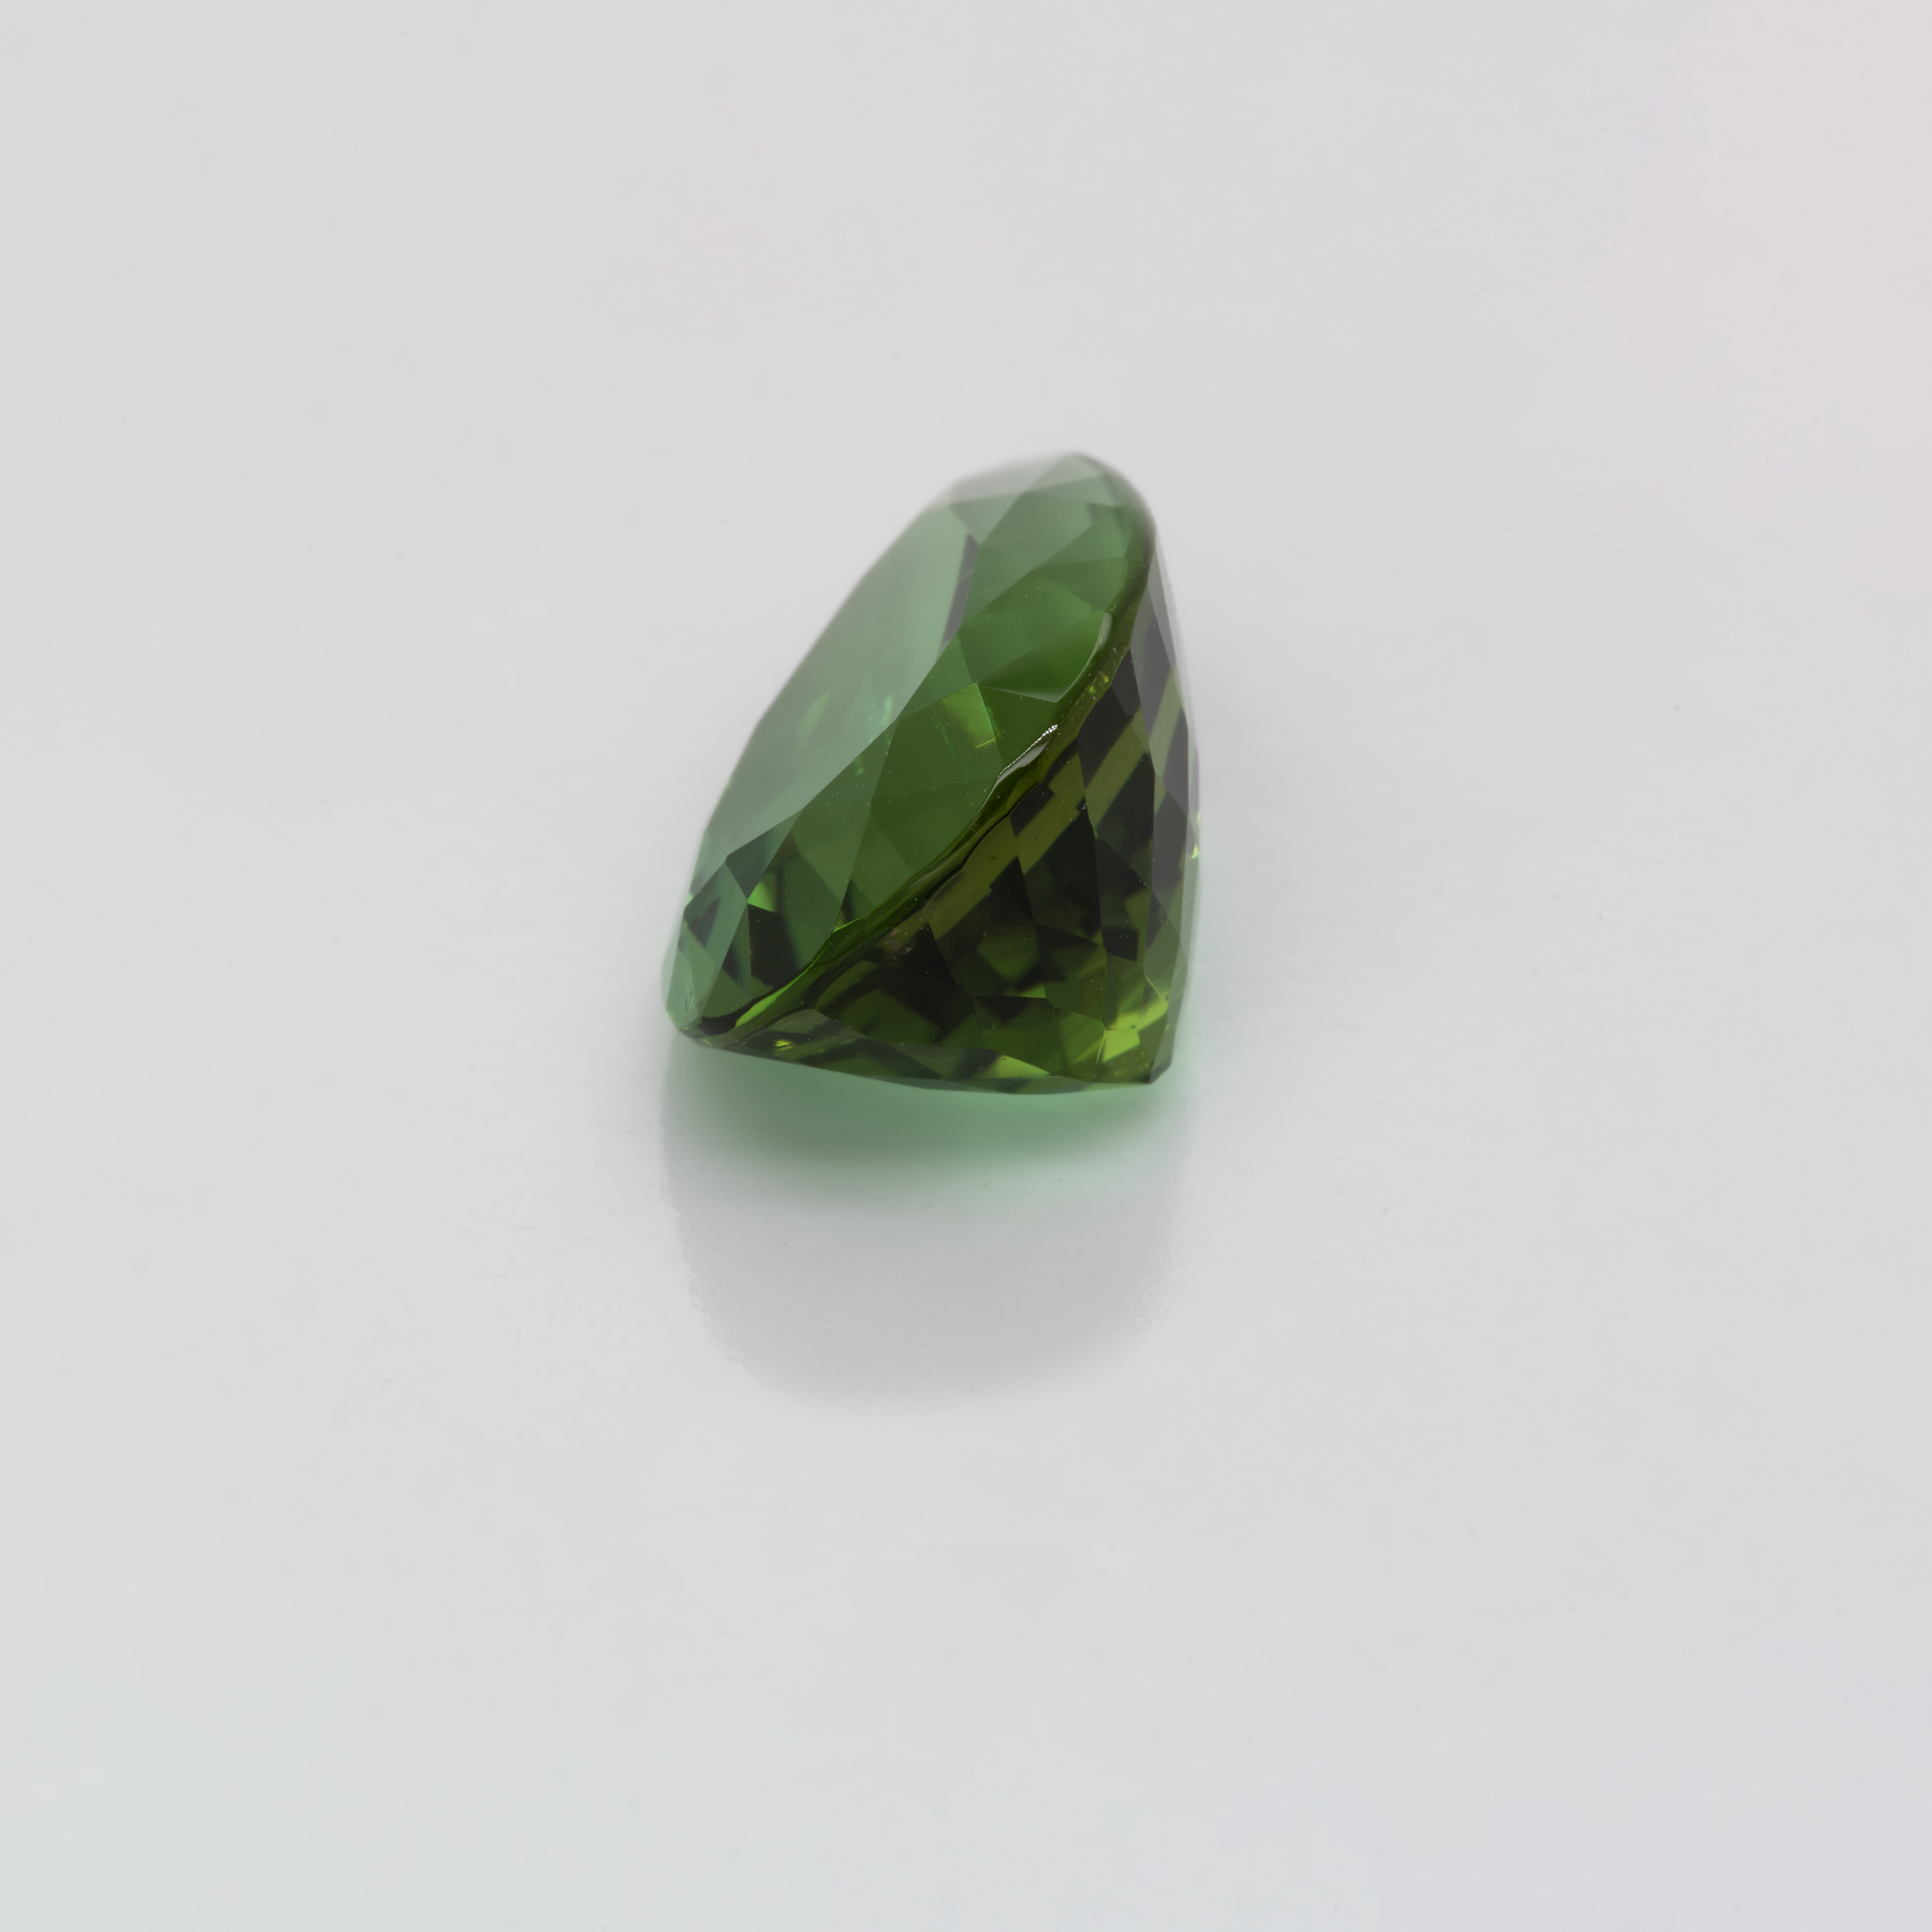 Tourmaline - green, pearhape, 14x10 mm, 5.98 cts, No. TR991019